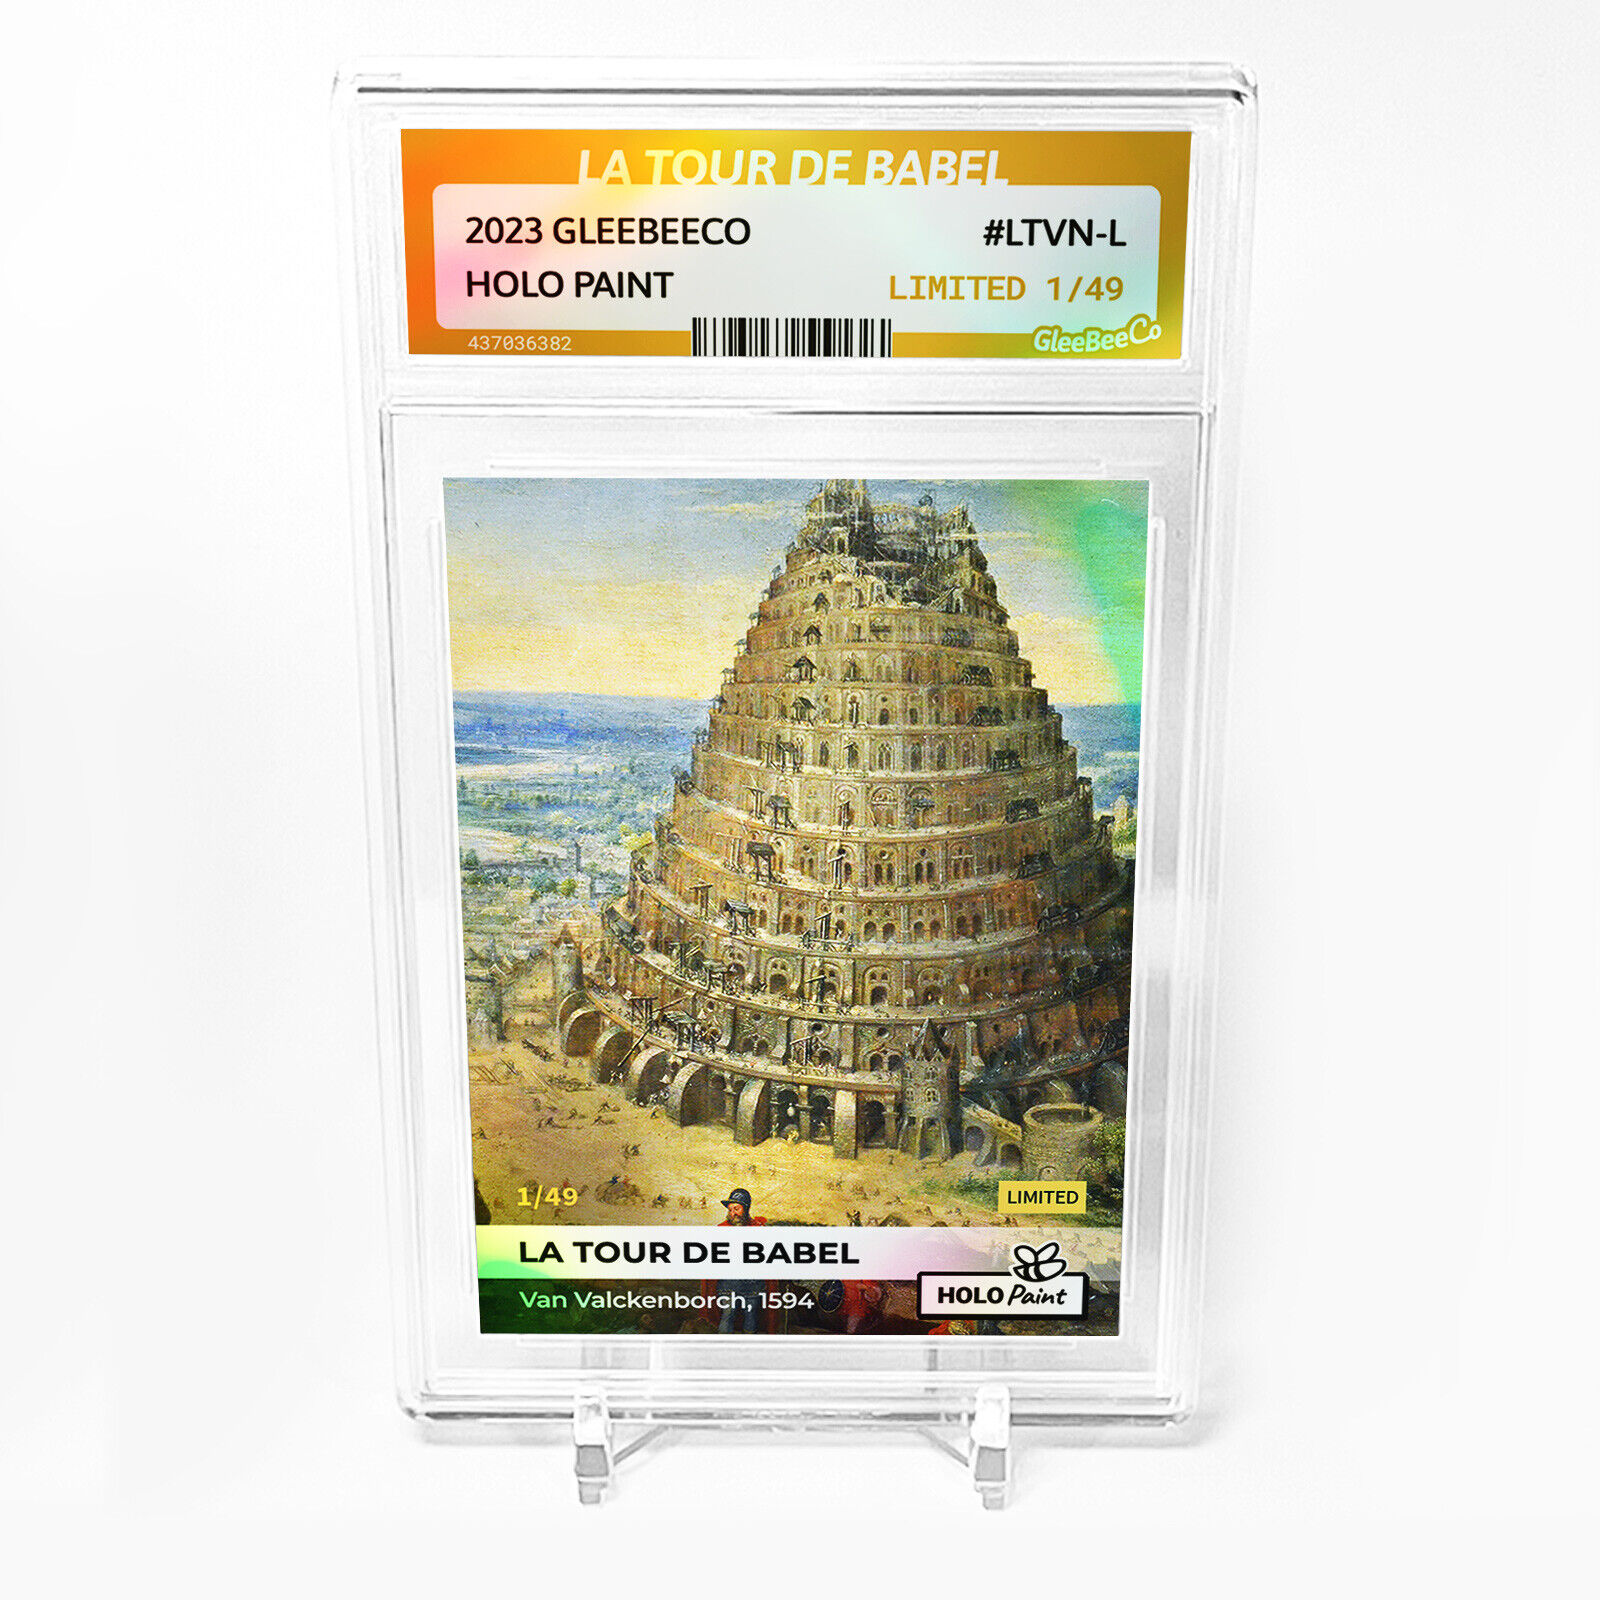 LA TOUR DE BABEL Tower of Babel Card 2023 GleeBeeCo Holographic #LTVN-L /49